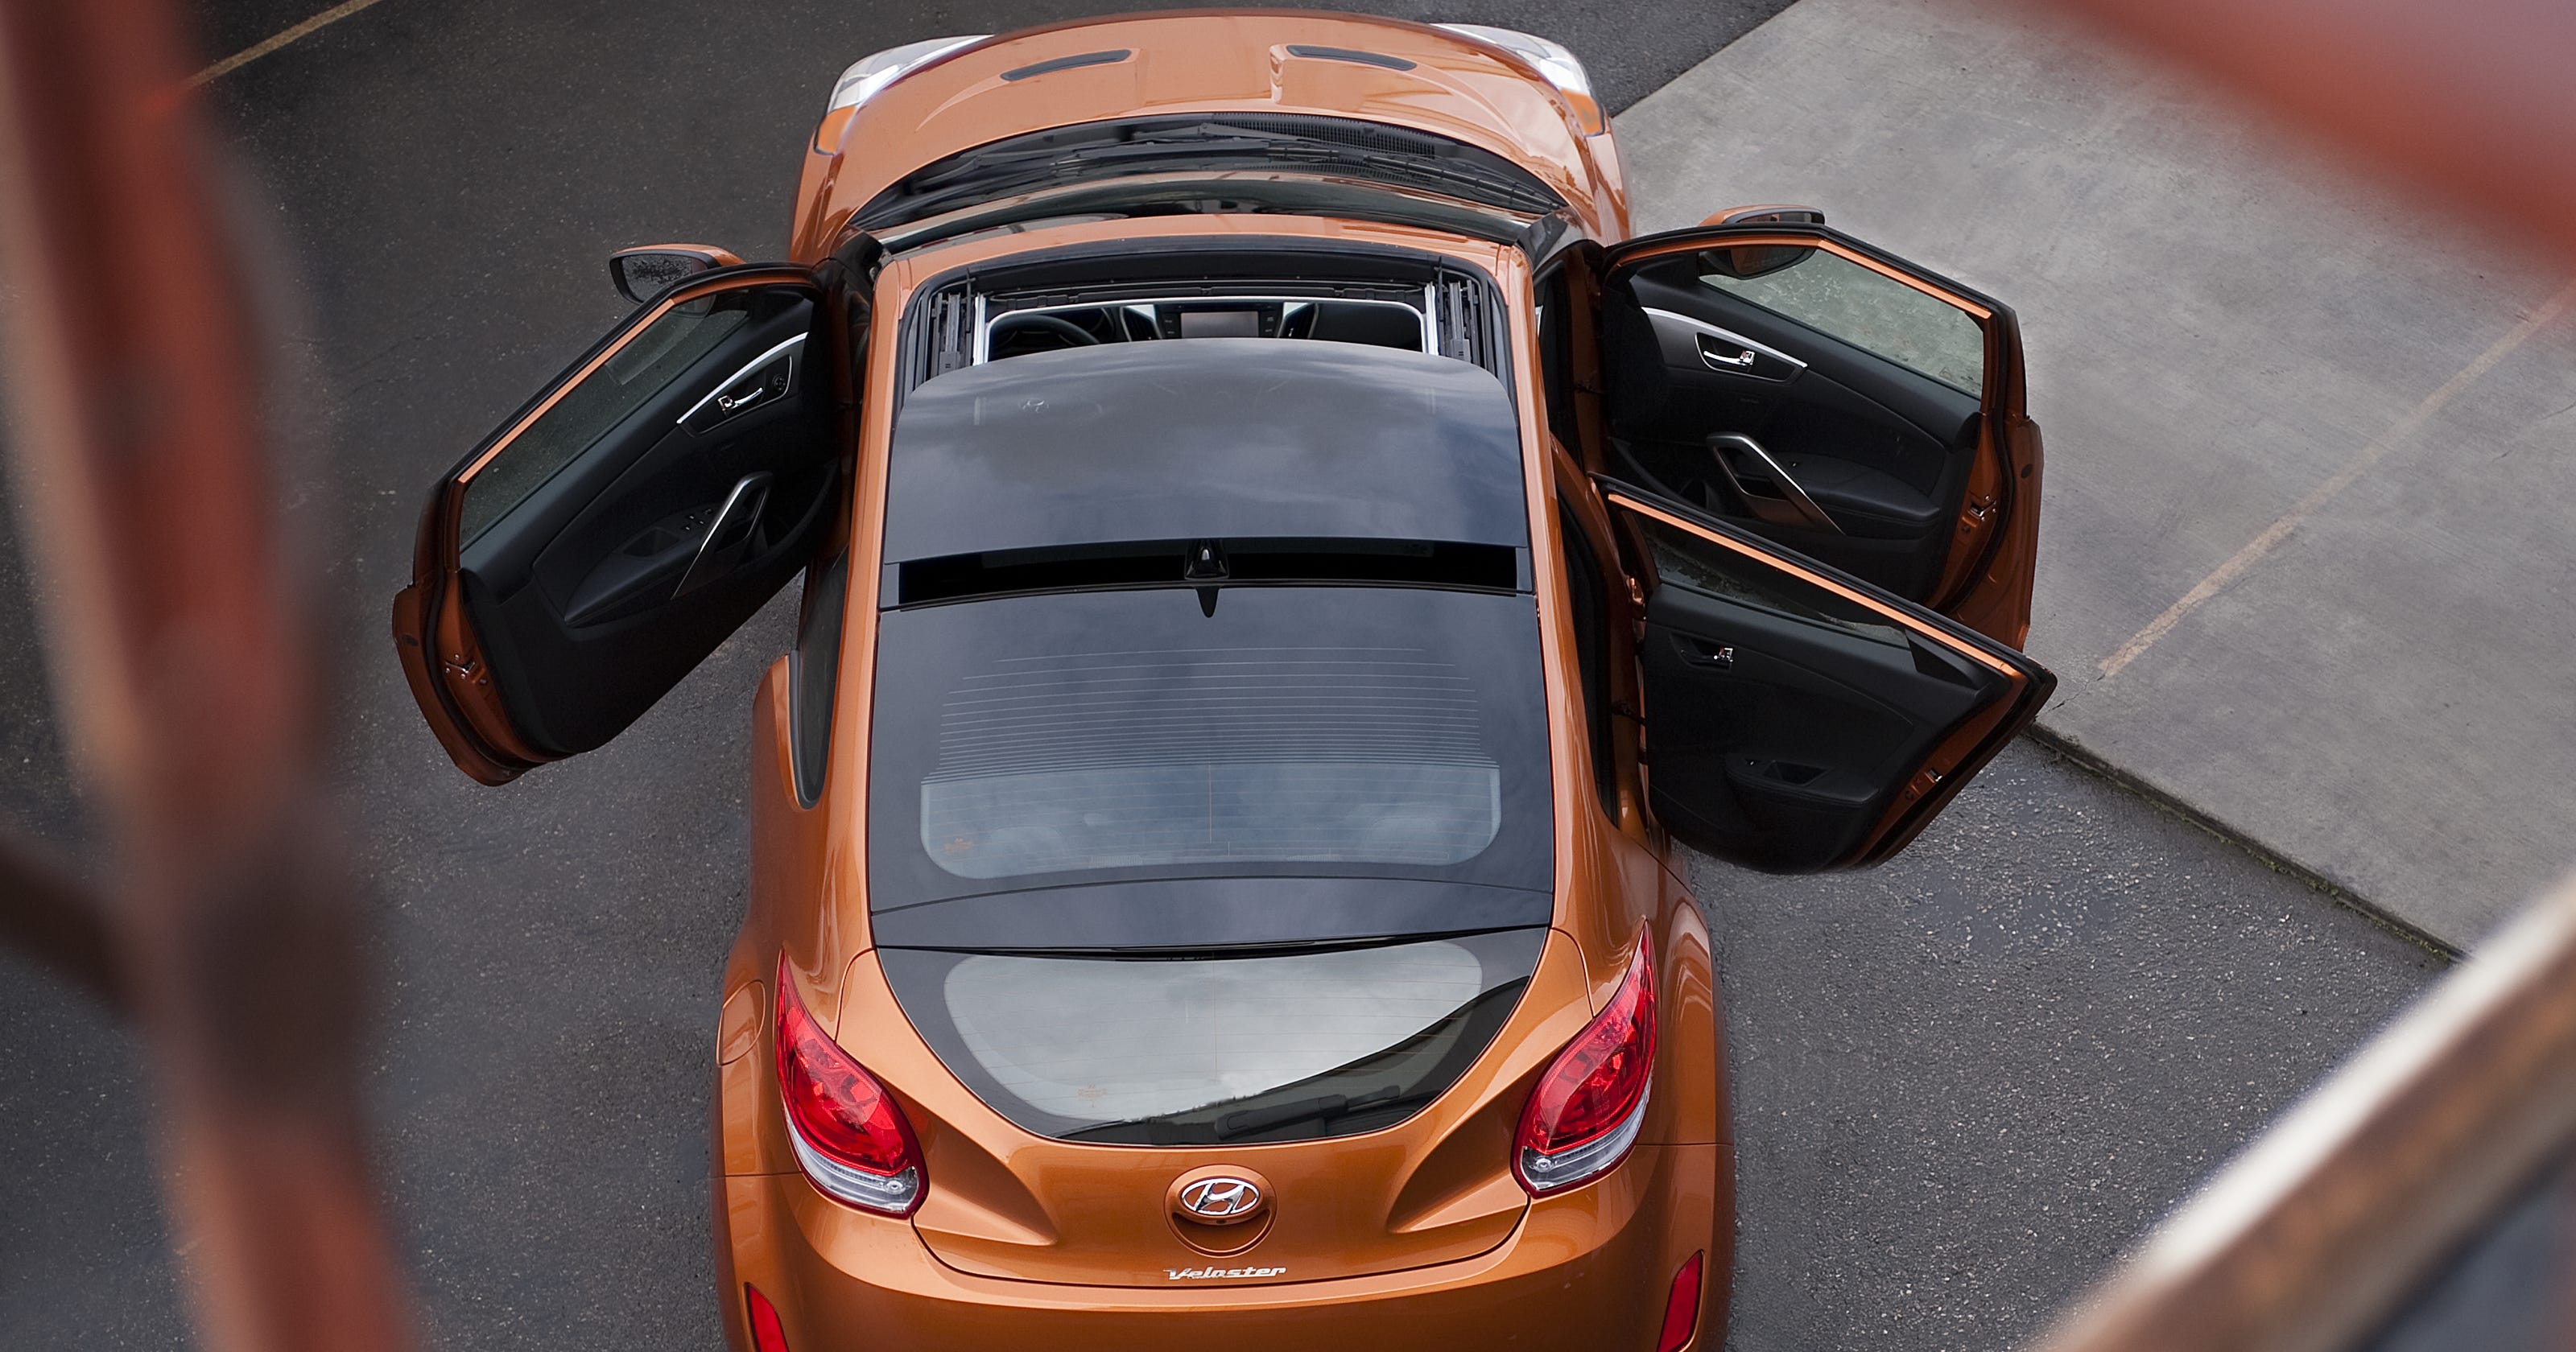 Hyundai recalls Veloster for sunroof, brake issues